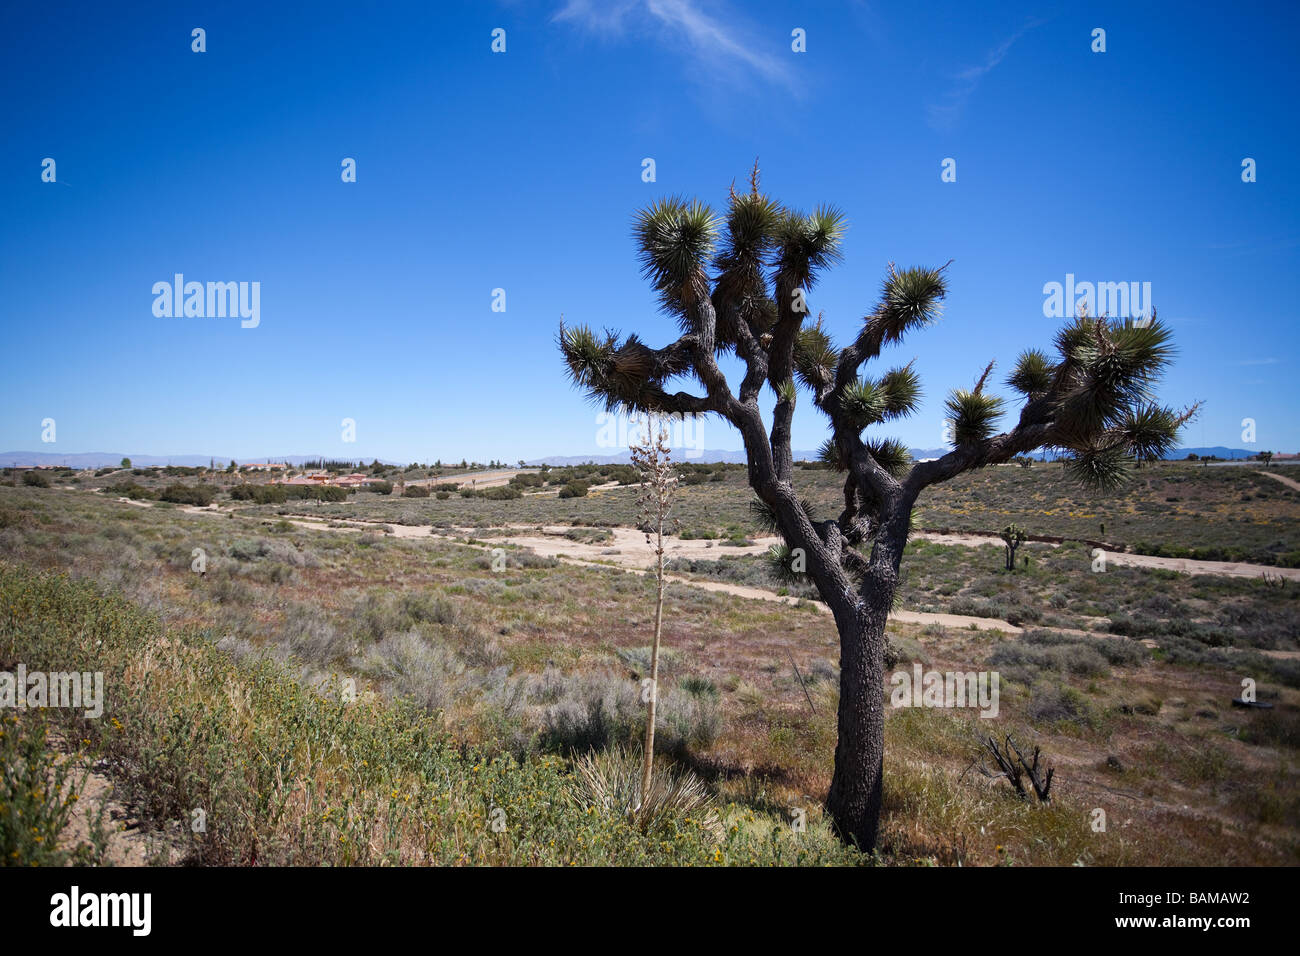 Joshua tree (Yucca brevifolia), Joshua Tree National Park, désert de Mojave, Californie du Sud, USA. Banque D'Images